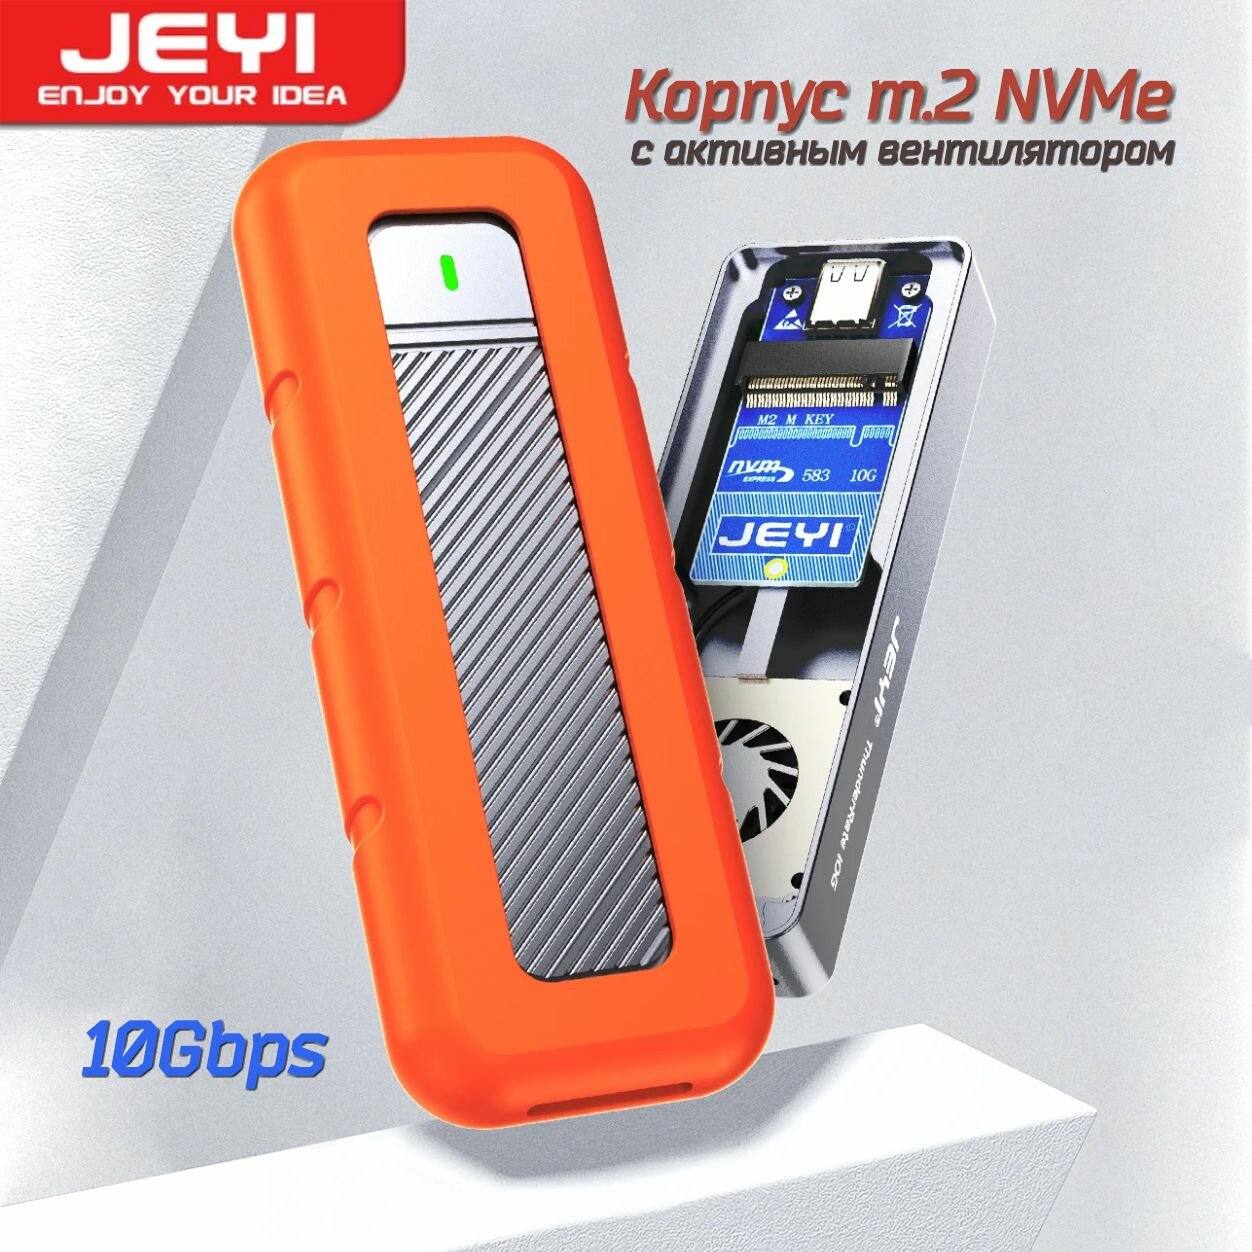 SSD-адаптер с активным вентилятором JEYI M.2 NVMe USB 3.2 10Gbps с защитным силиконовым чехлом